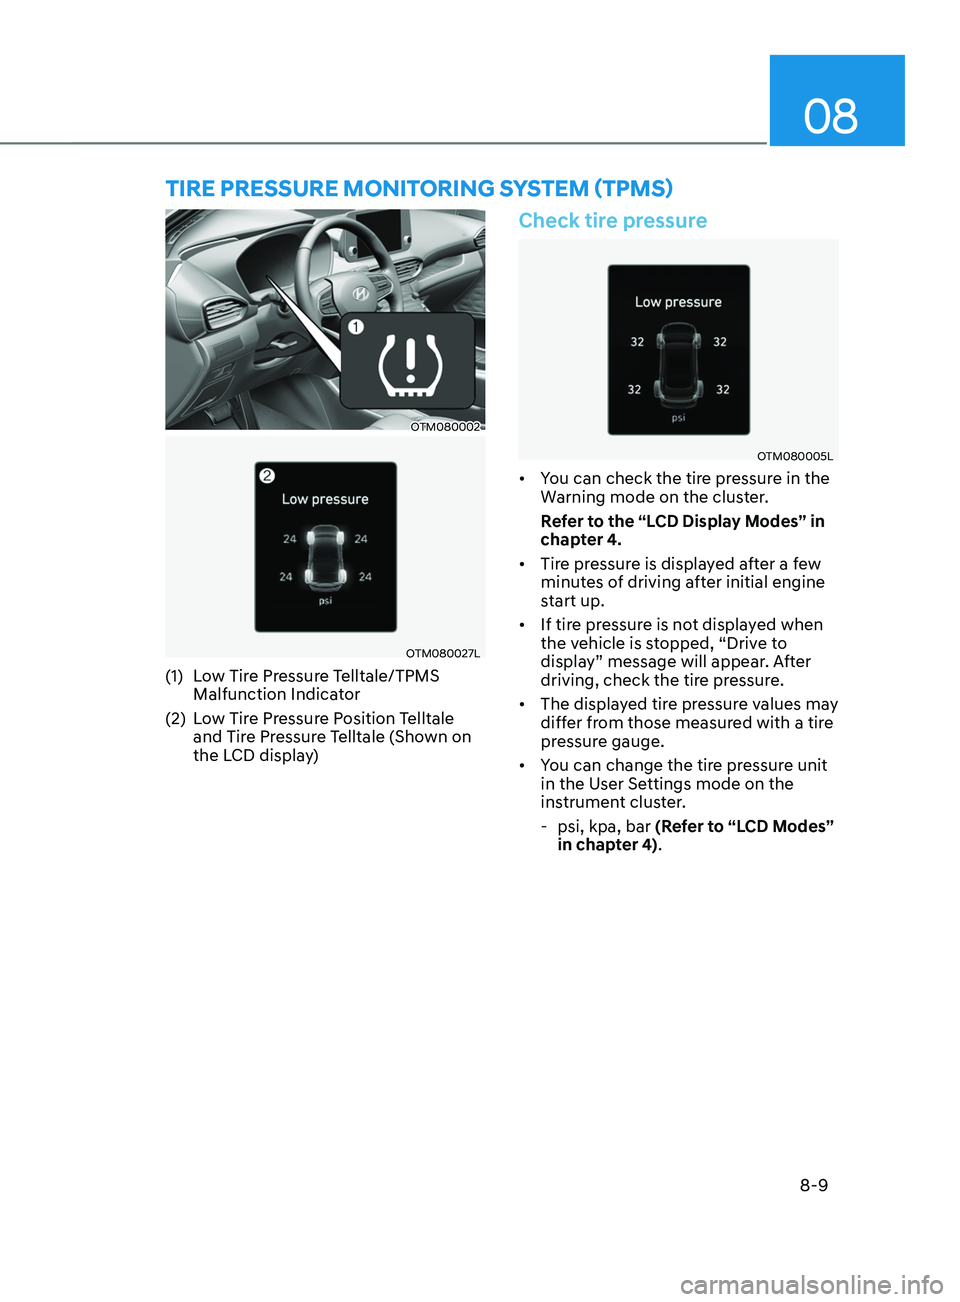 HYUNDAI SANTA FE 2021  Owners Manual 08
8-9
OTM080002
OTM080027L
(1) Low Tire Pressure Telltale/TPMS 
Malfunction Indicator
(2)
 Lo

w Tire Pressure Position Telltale 
and Tire Pressure Telltale (Shown on 
the LCD display)
Check tire pre